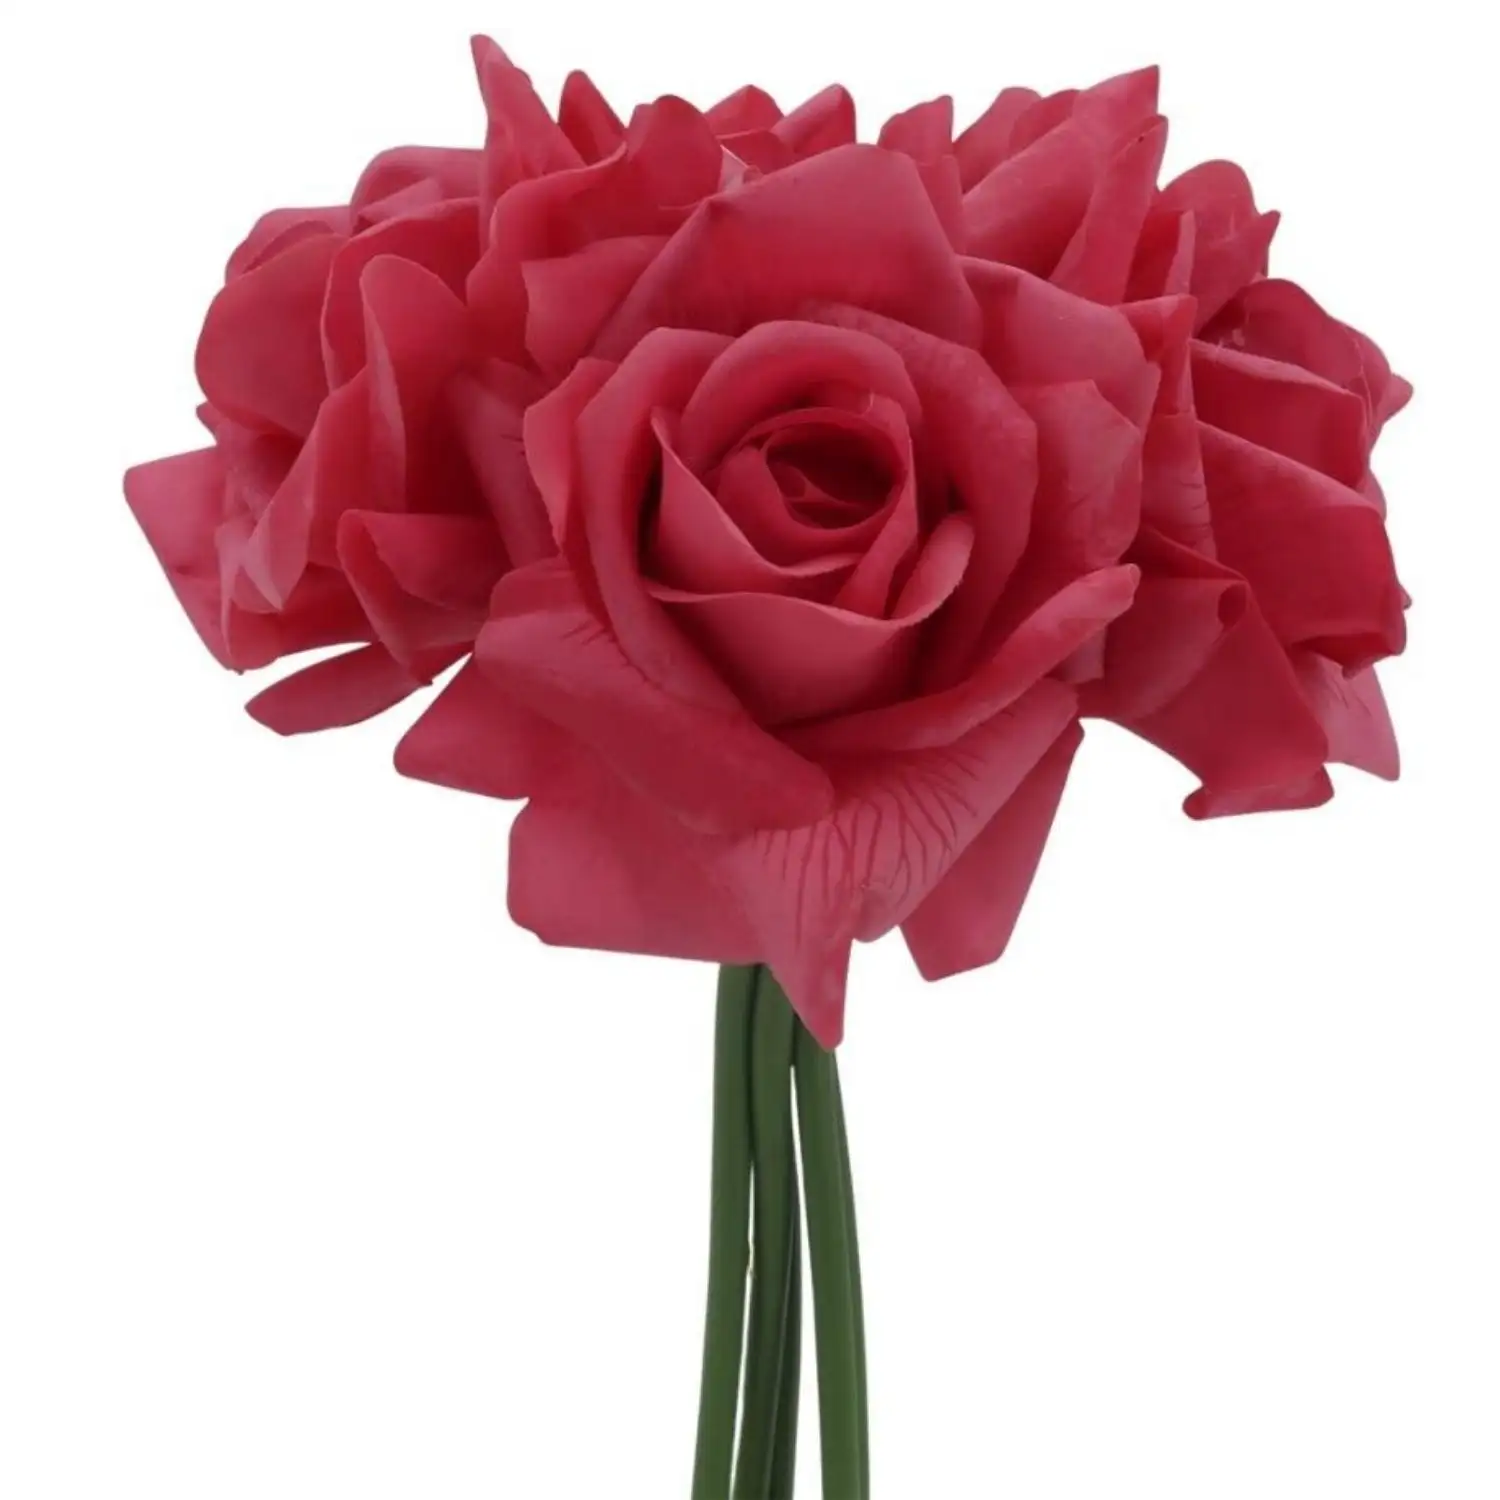 Paket bunga mawar lateks sentuhan asli buatan buket pengantin pernikahan buket bunga imitasi Set 5 kelembaban tepi rol buket mawar